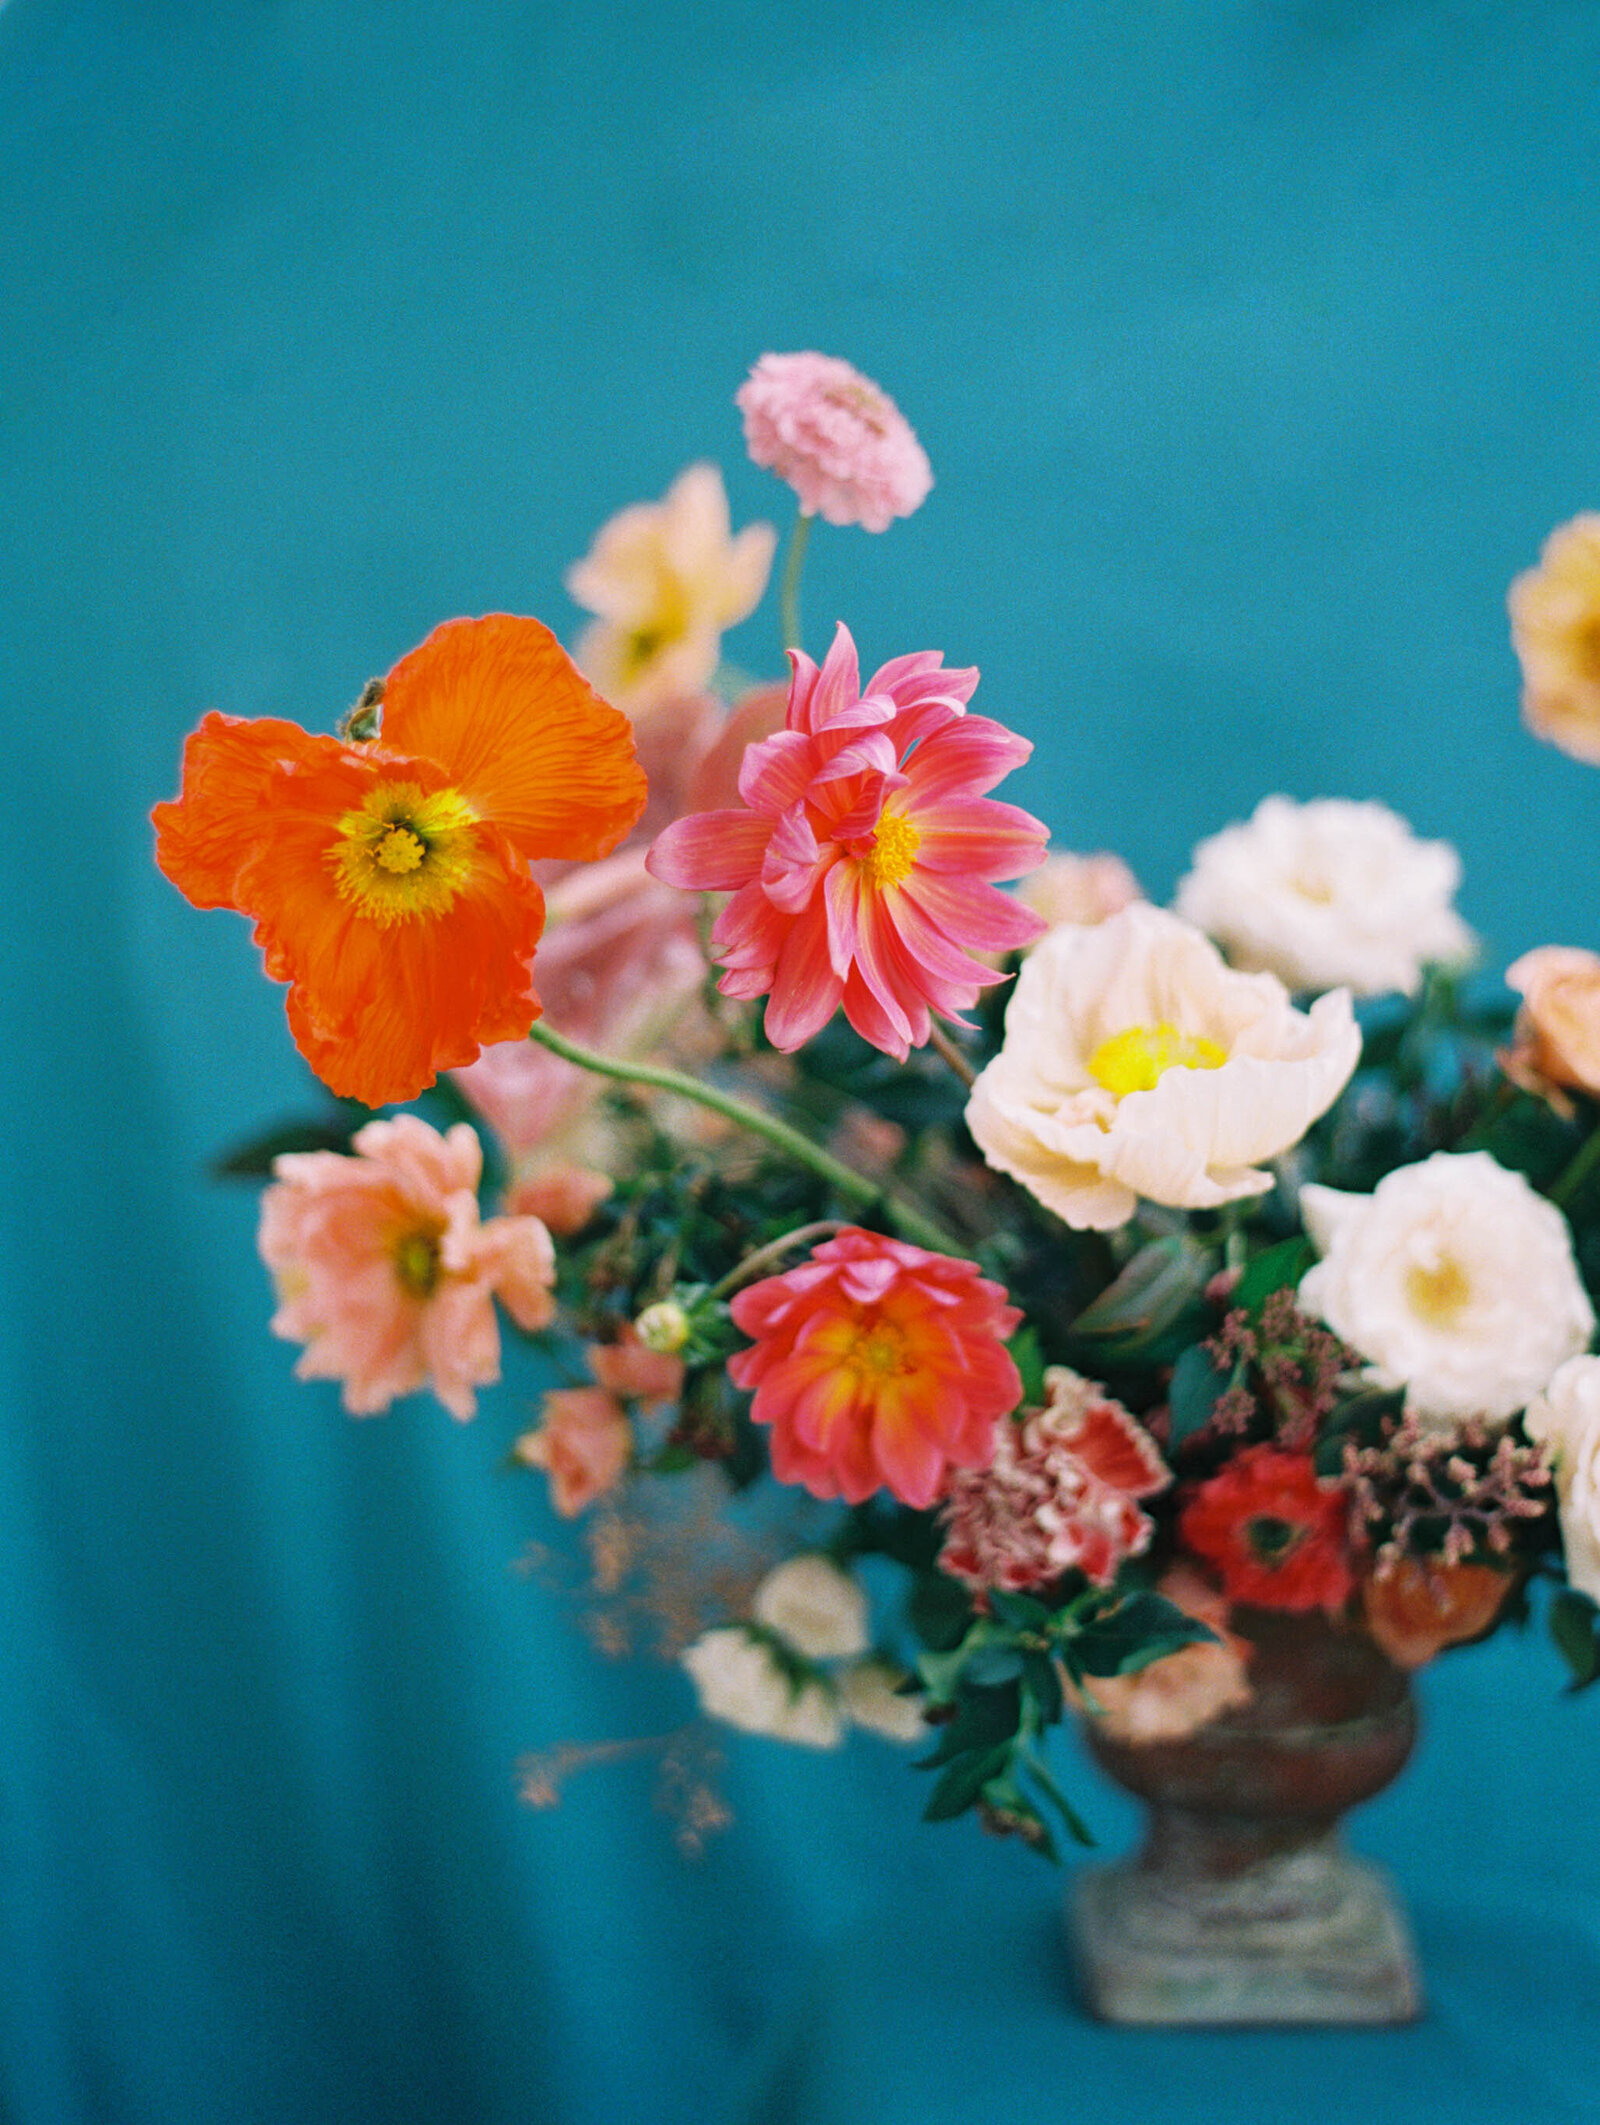 max-owens-design-at-home-floral-arrangements-36-orange-poppies